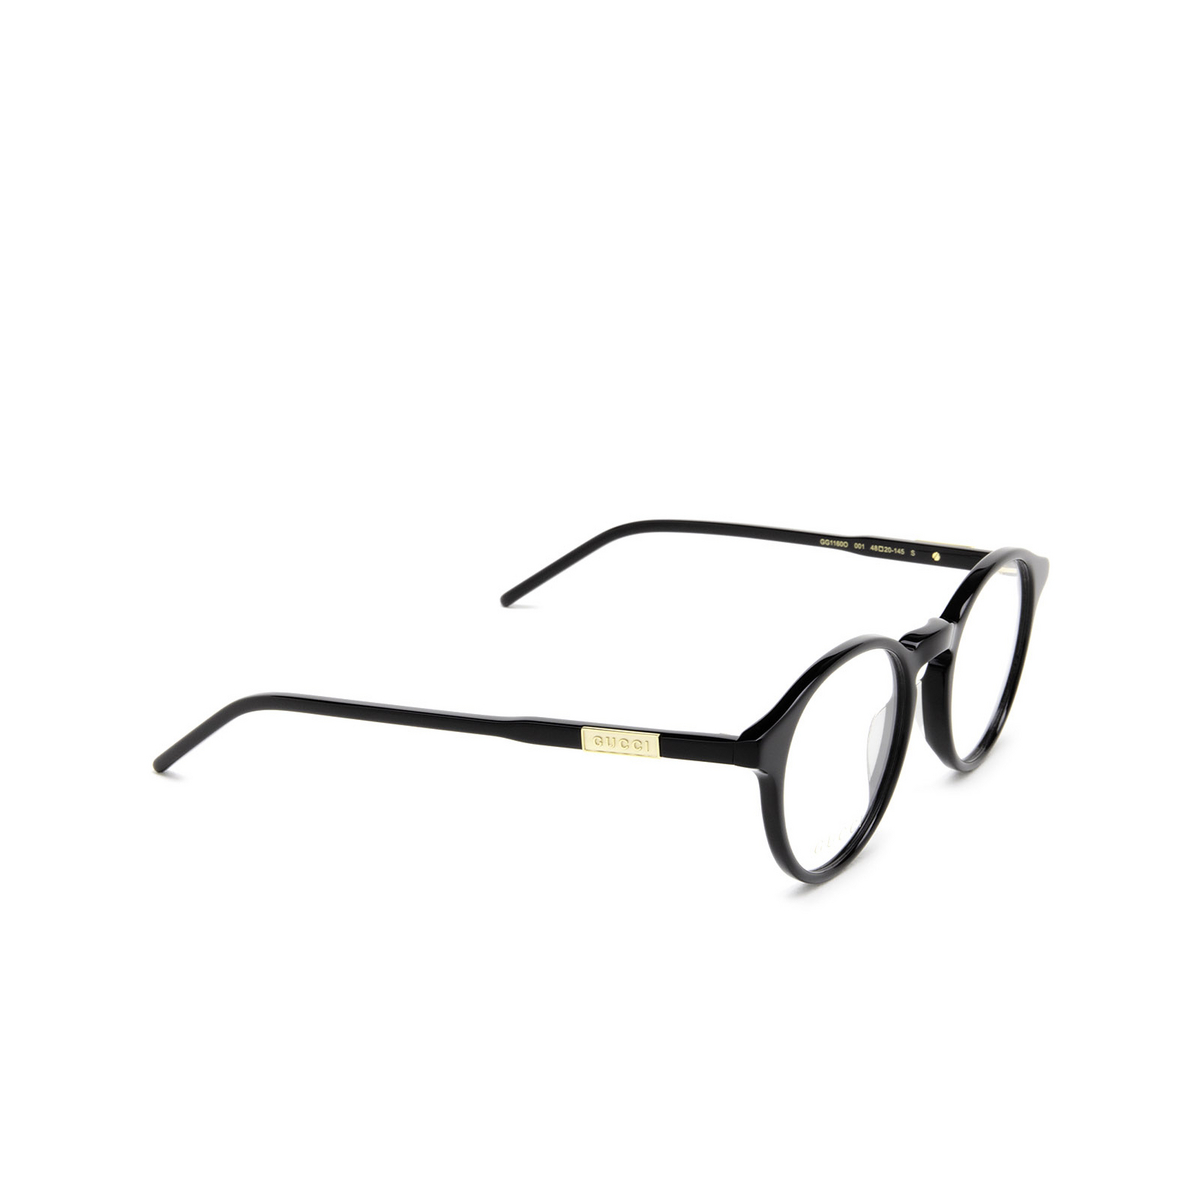 Gucci® Round Eyeglasses: GG1160O color Black 001 - three-quarters view.